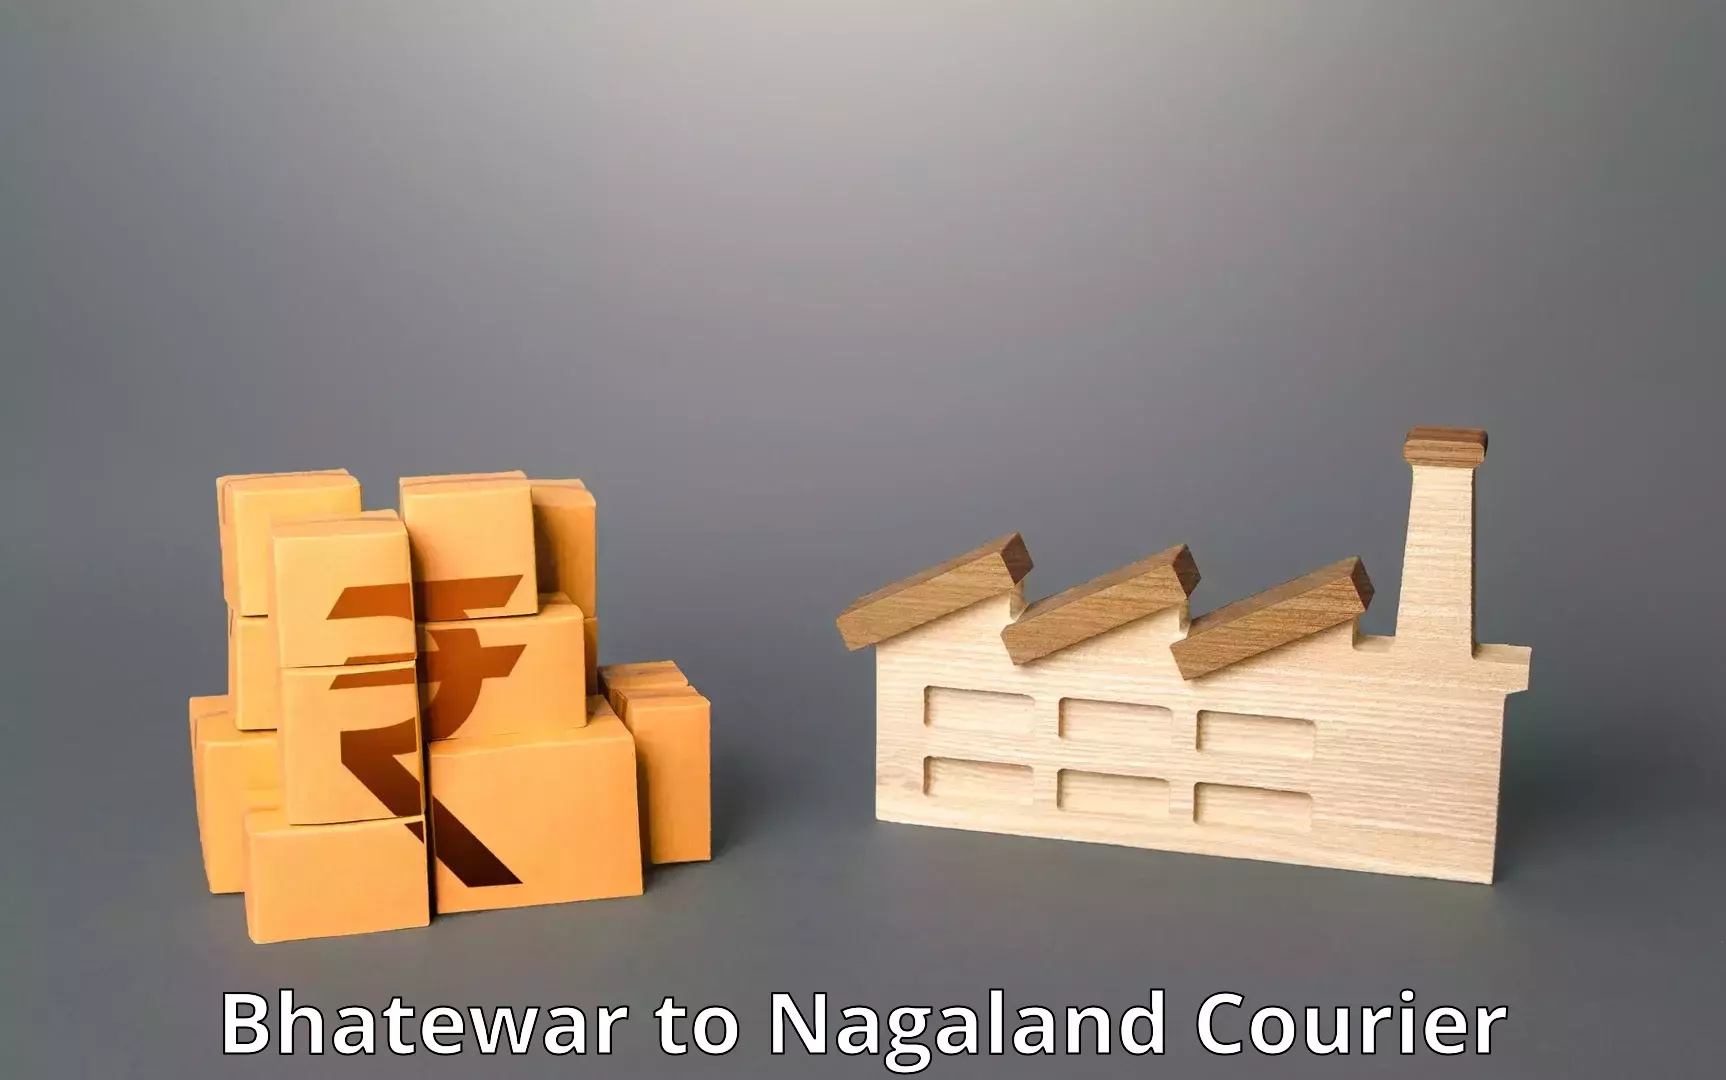 Global logistics network Bhatewar to Nagaland